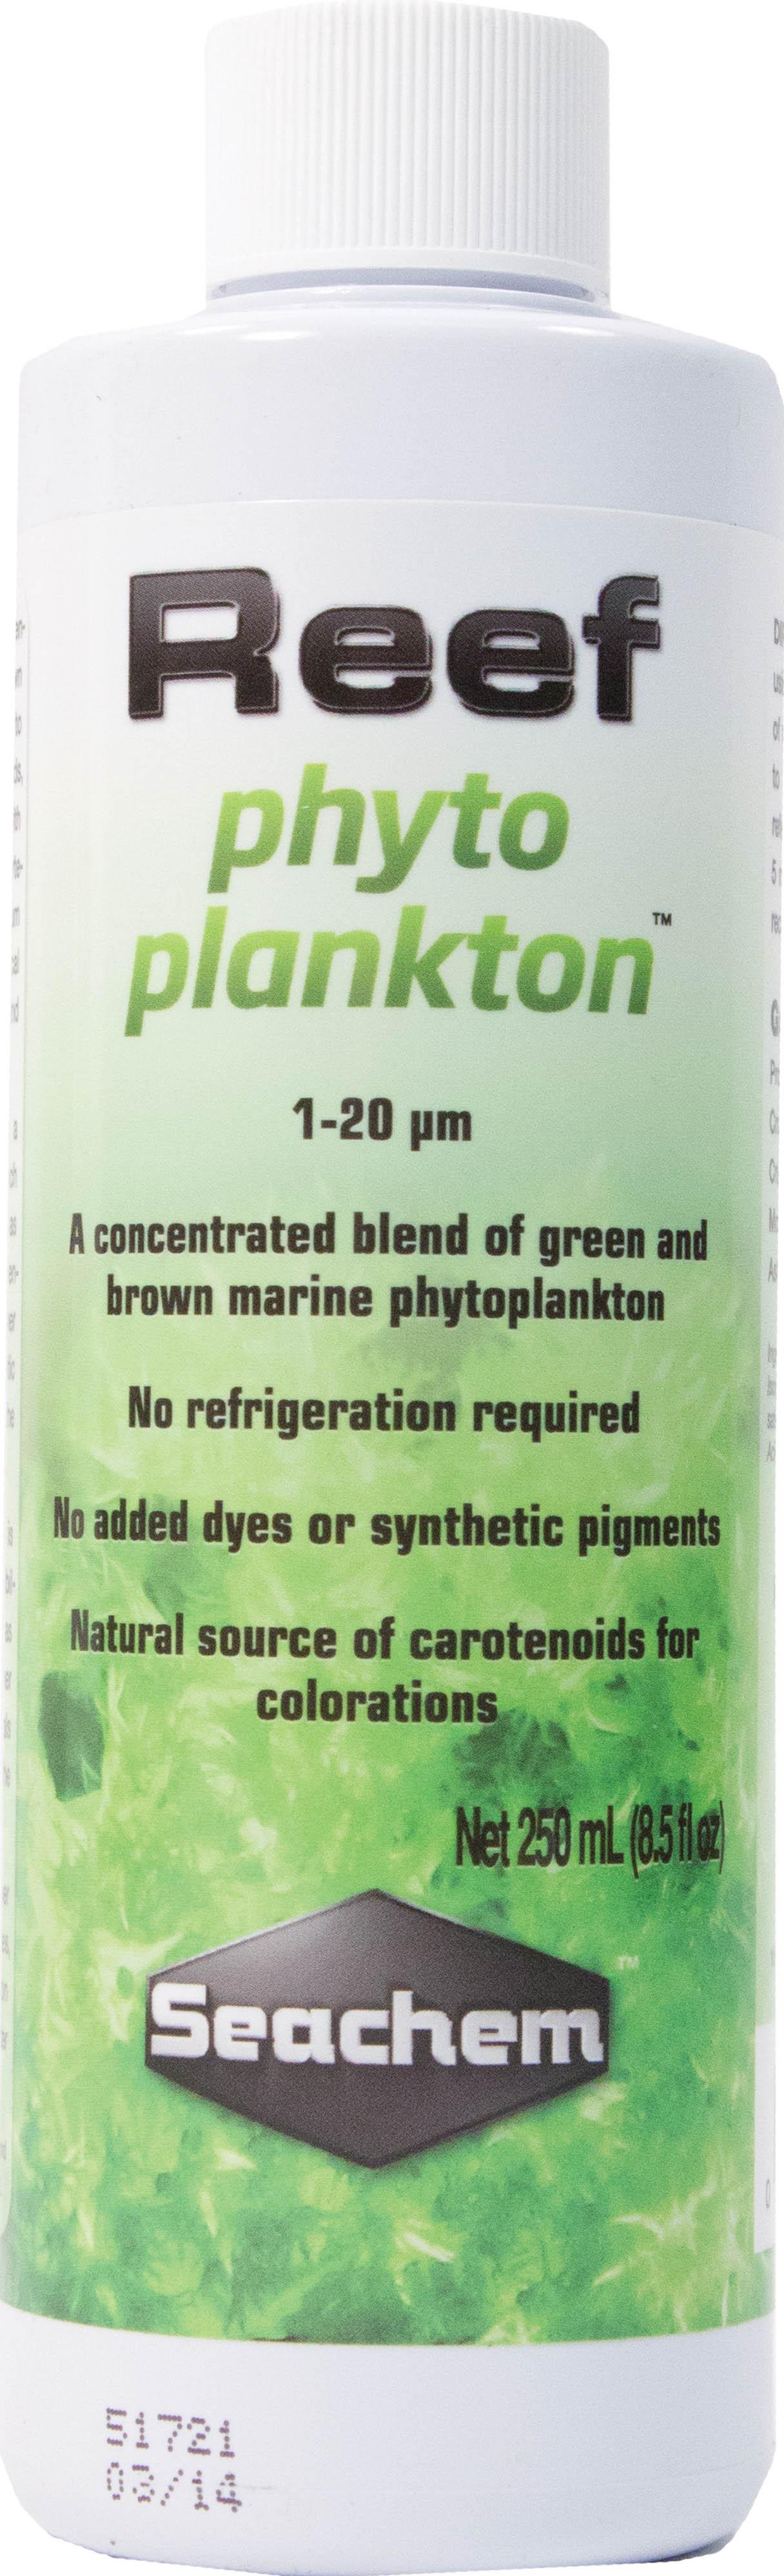 Reef Phytoplankton